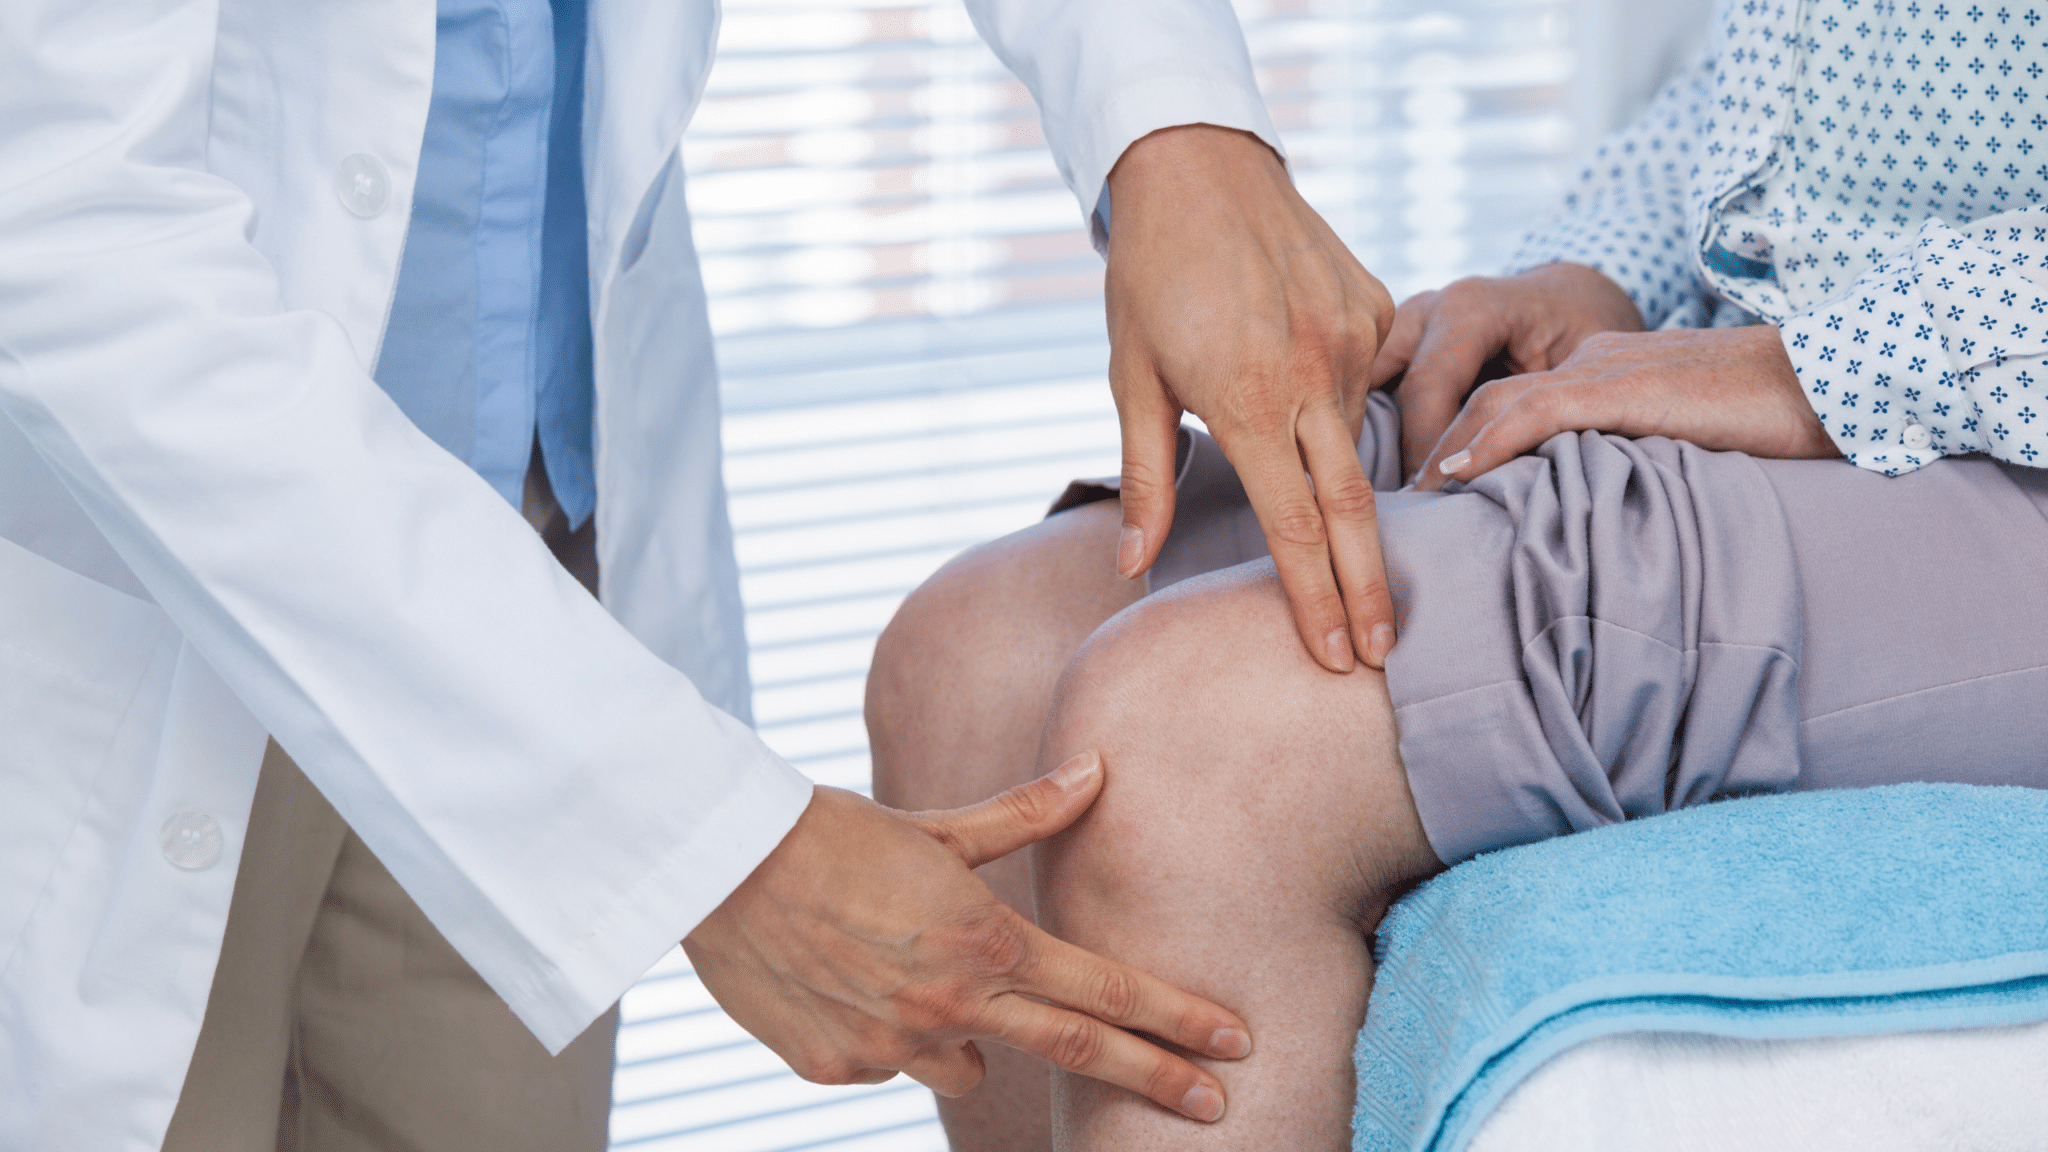 Doctor examining a patient's knee